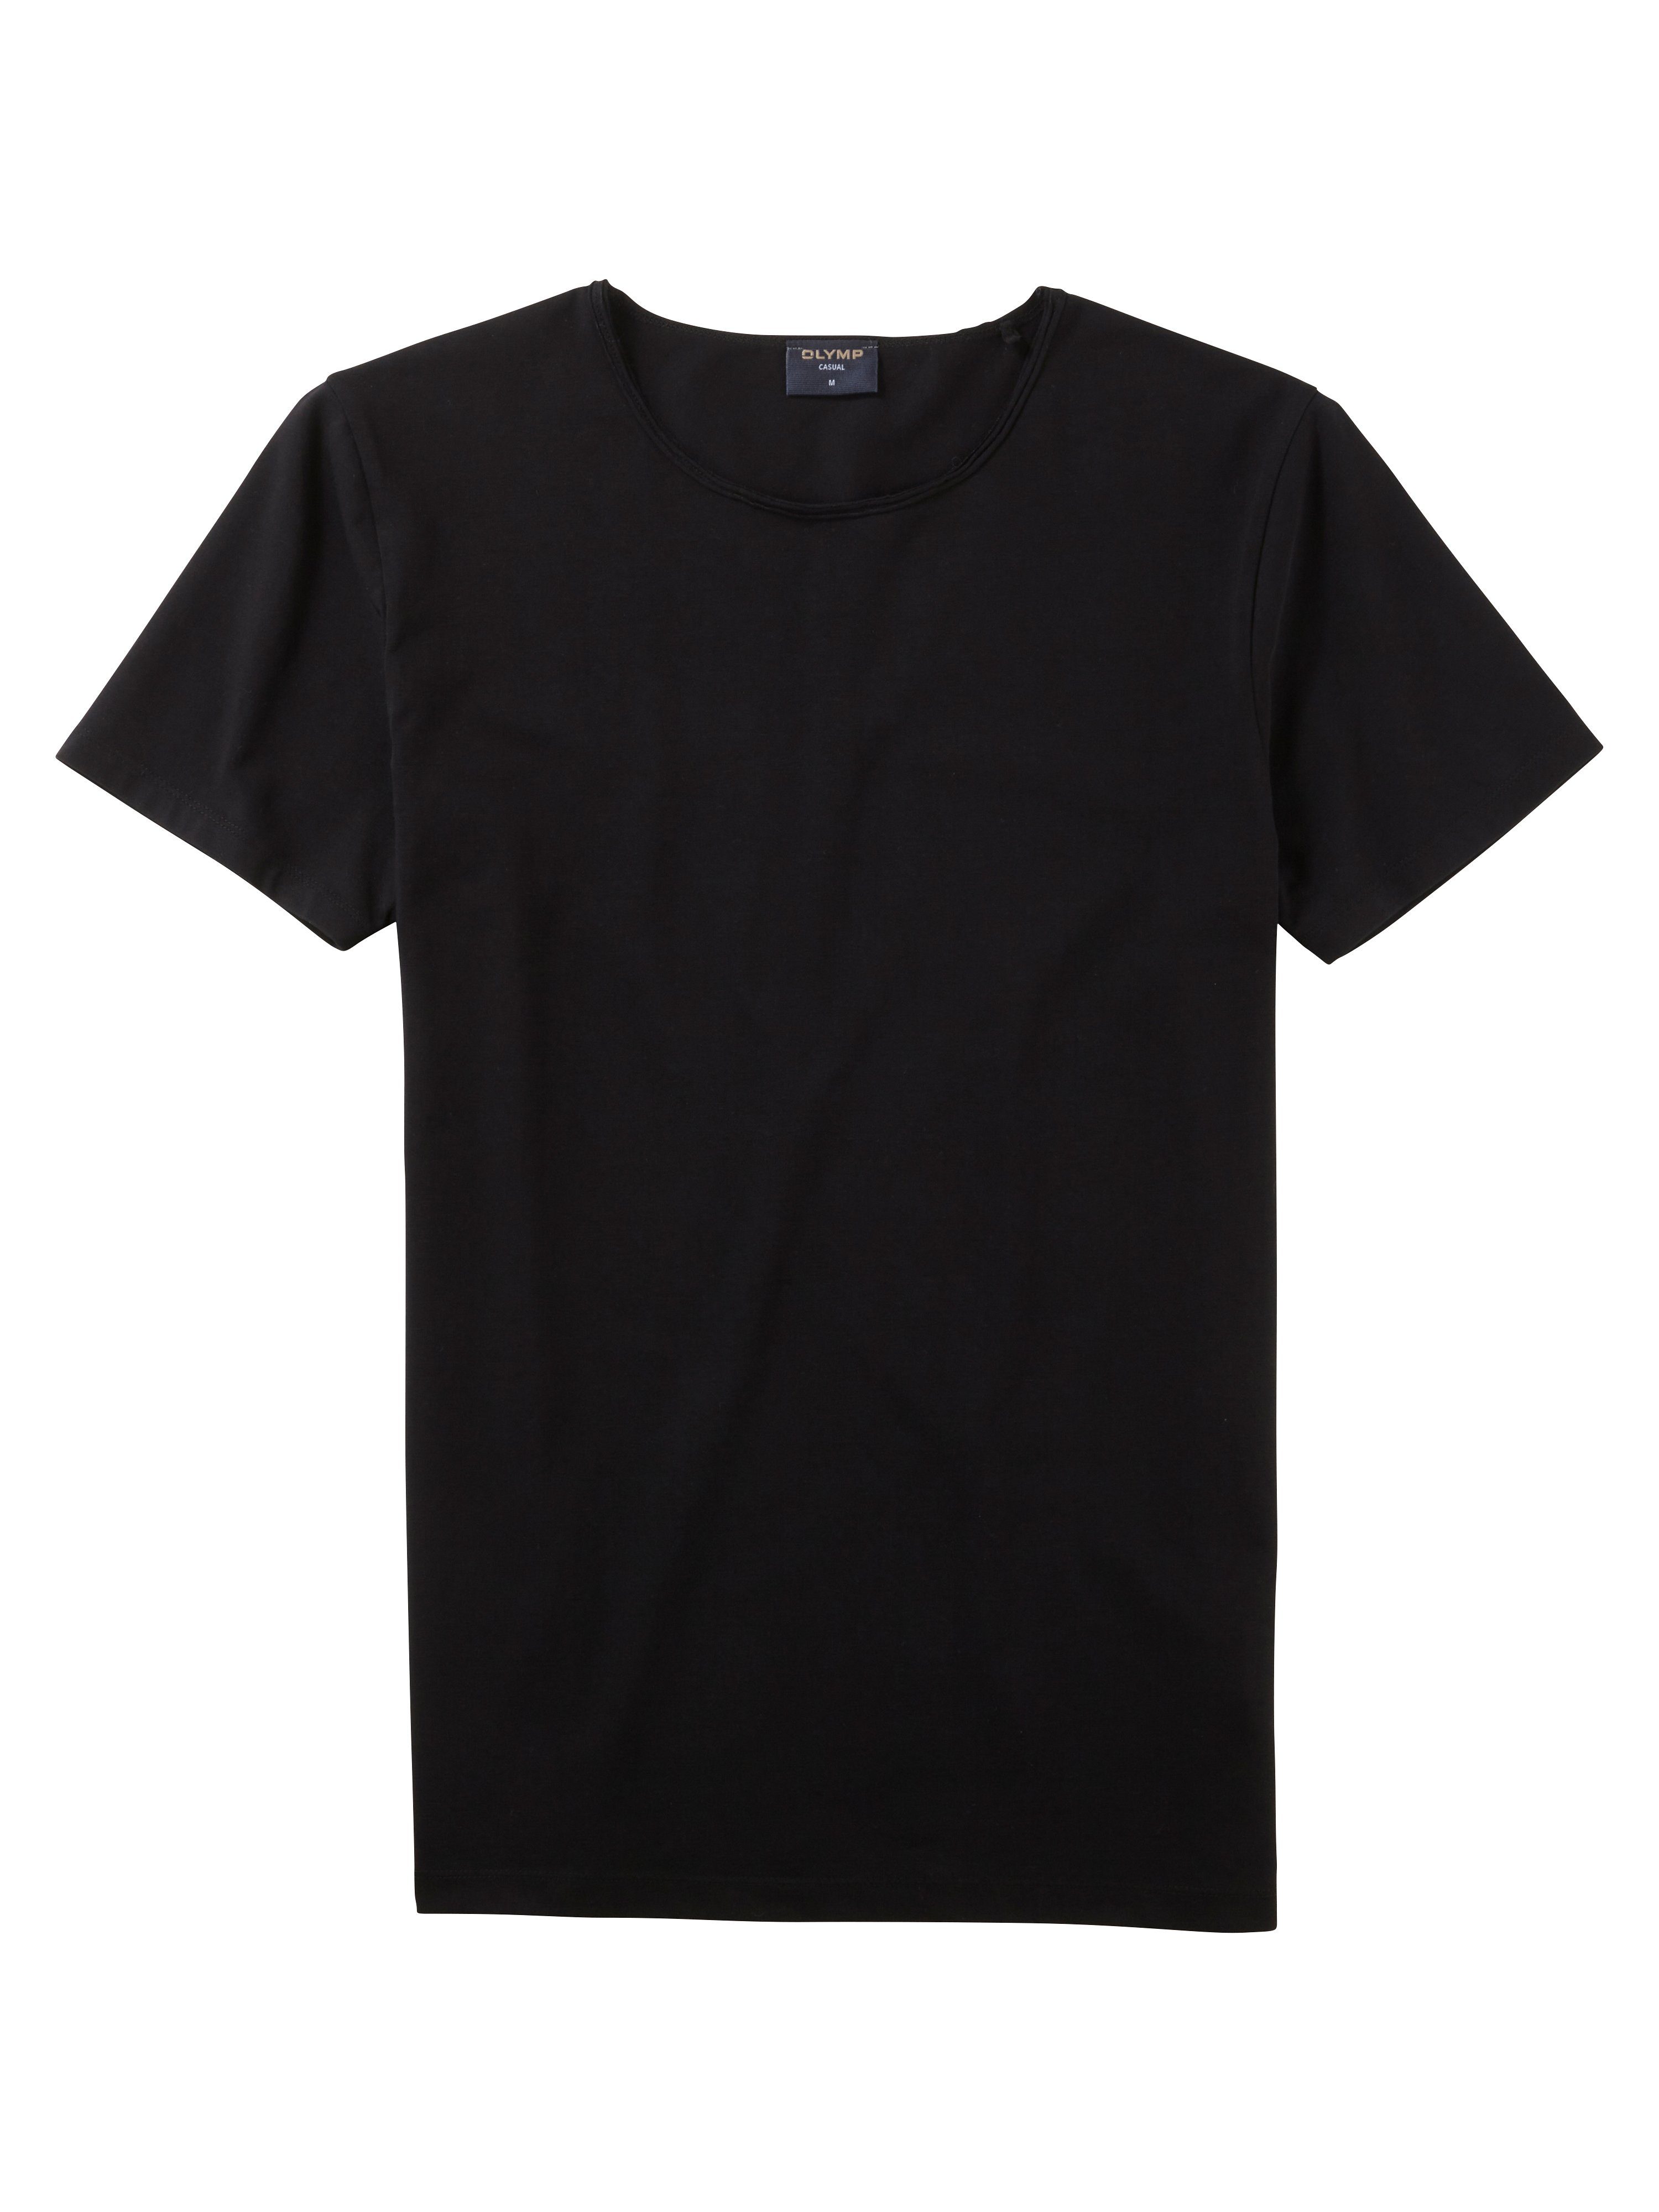 OLYMP T-Shirt Casual schwarz